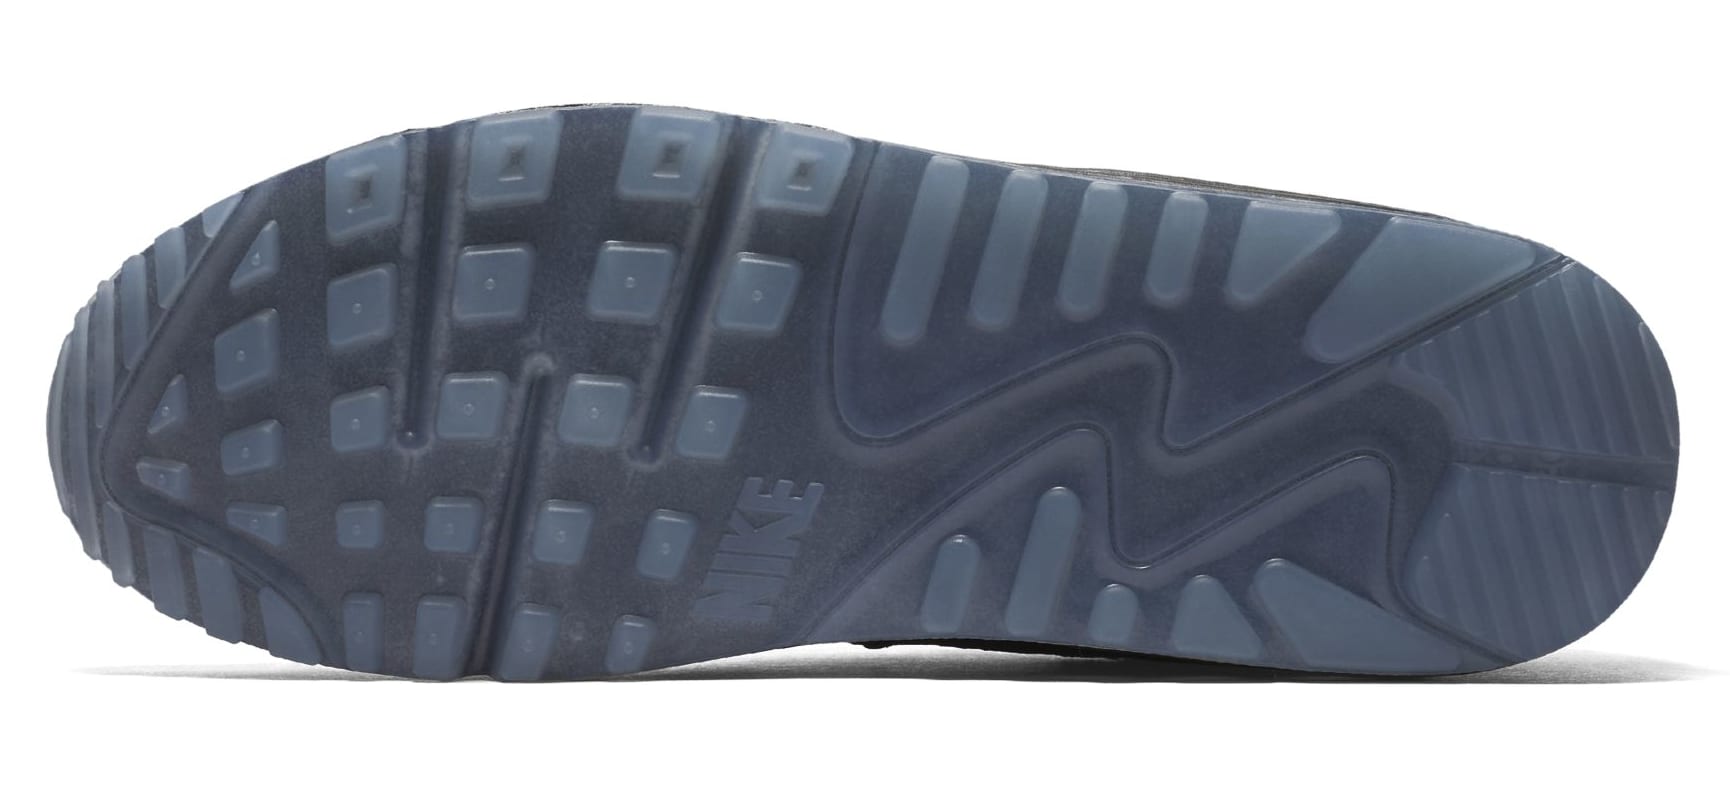 Nike Air Max 90 Black/Black-Volt AQ6101-001 Release Date | Sole Collector